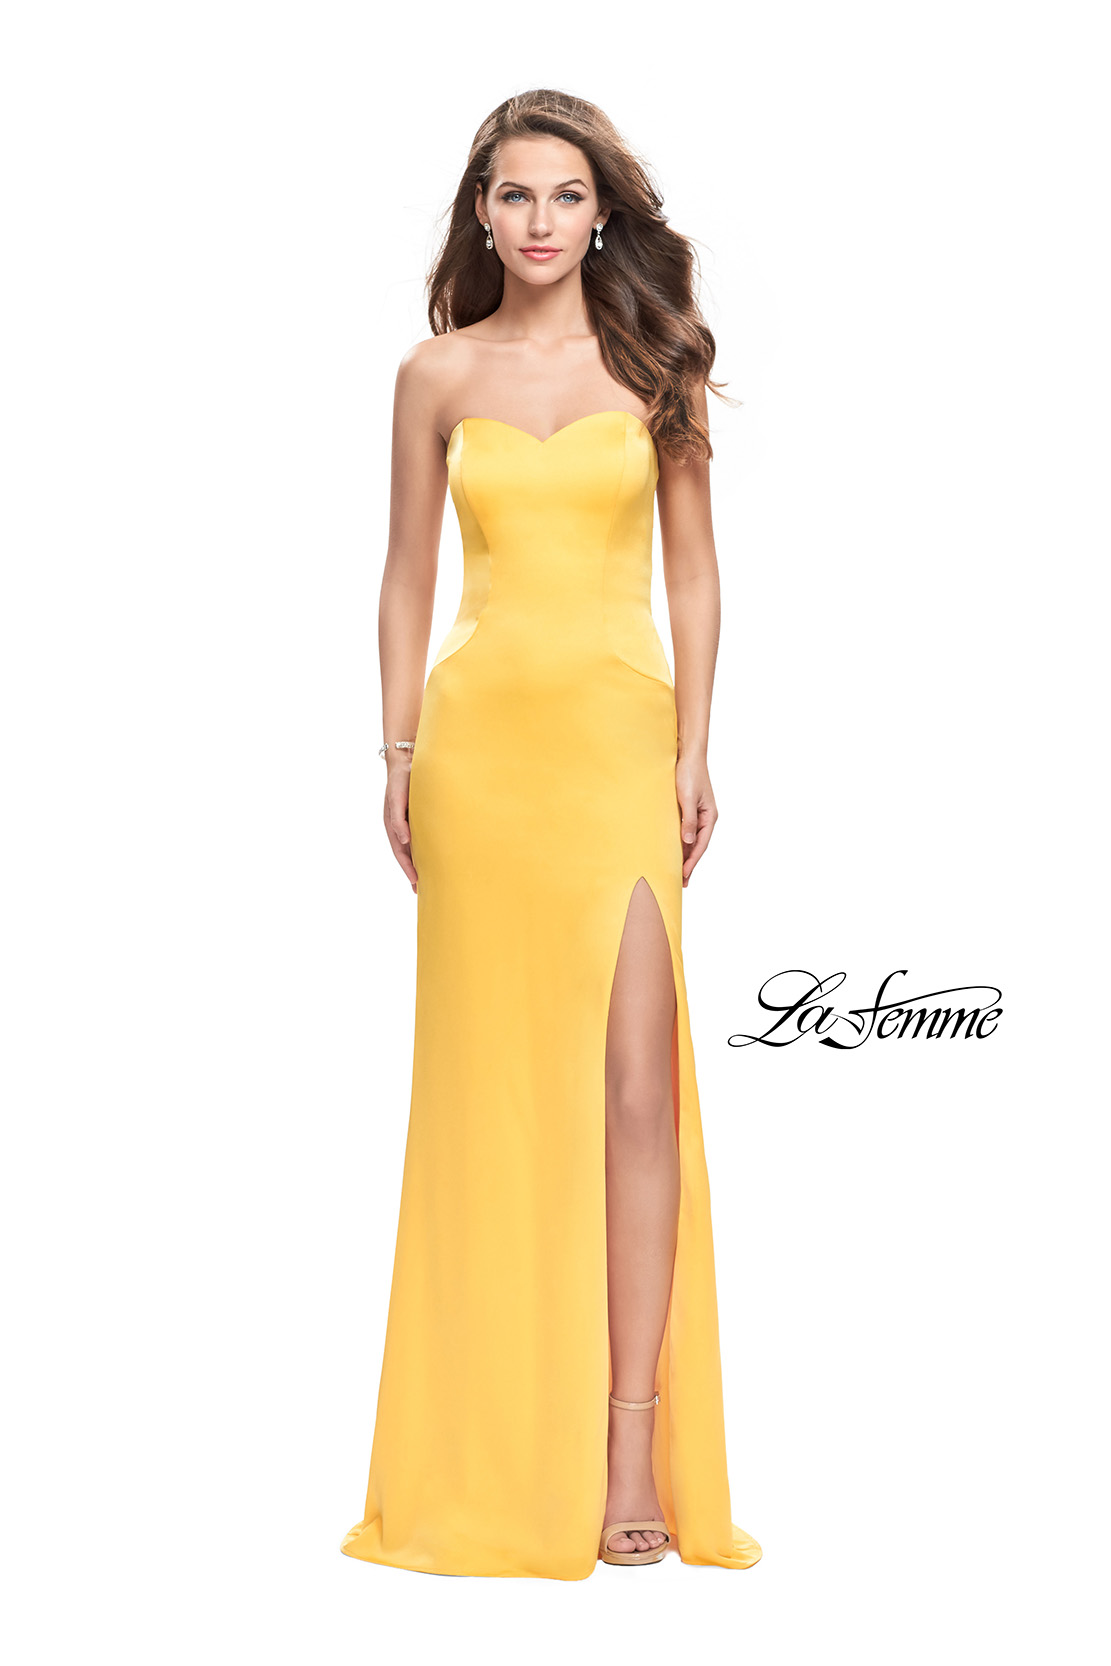 yellow form fitting dress